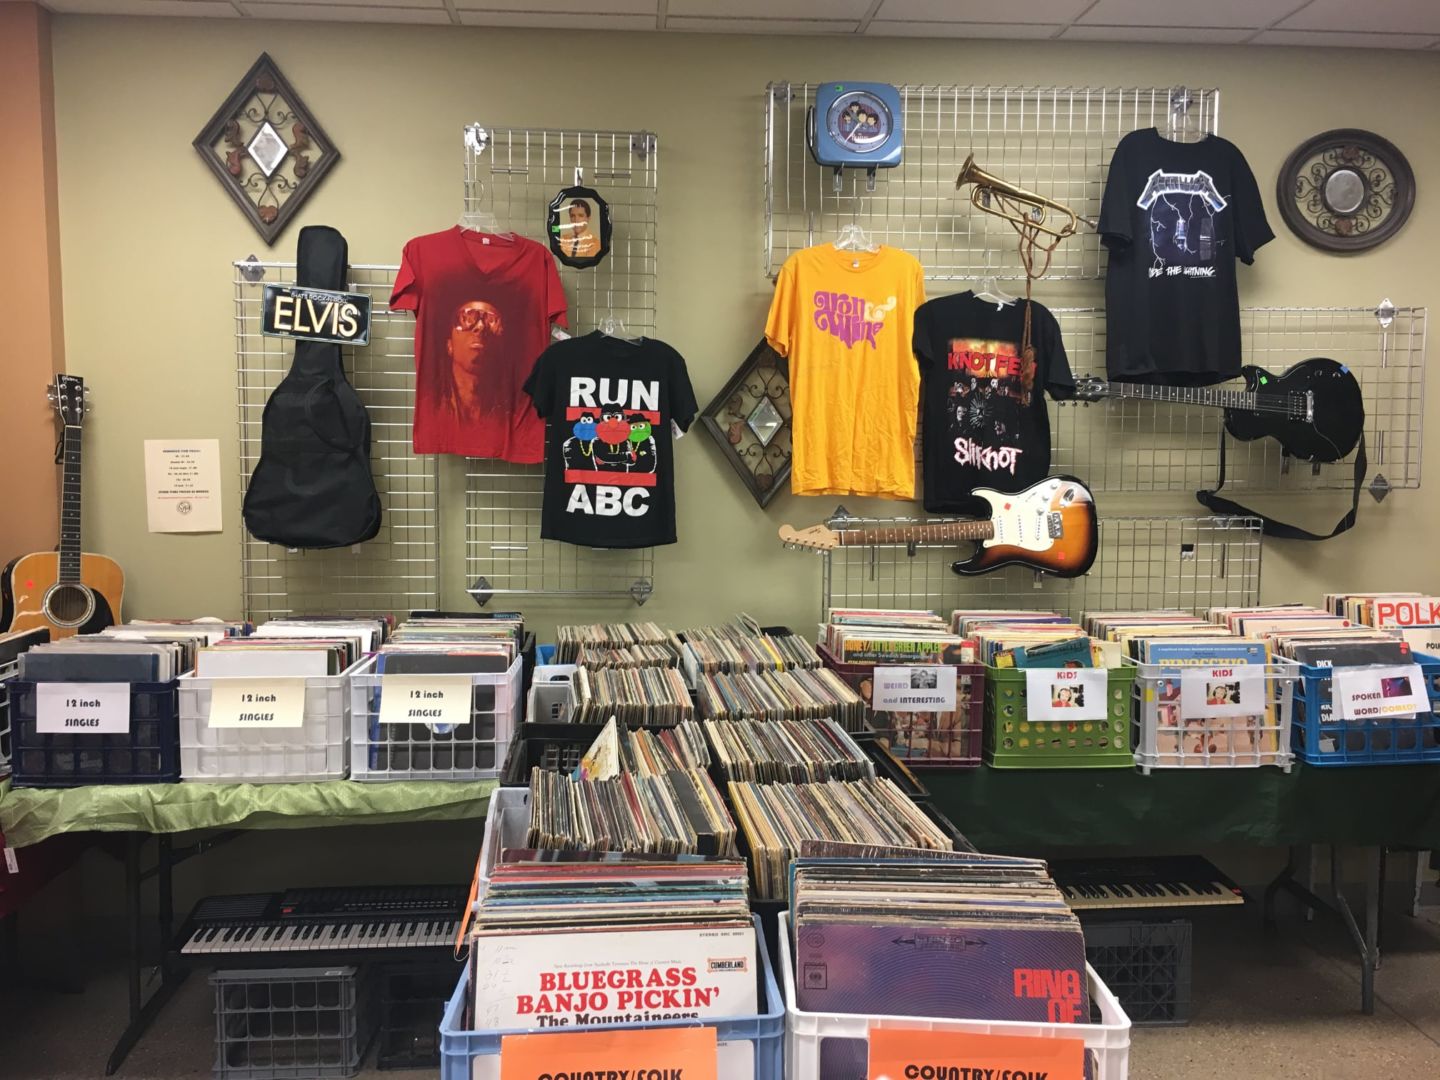 A display of records and rock bank tee-shirts.